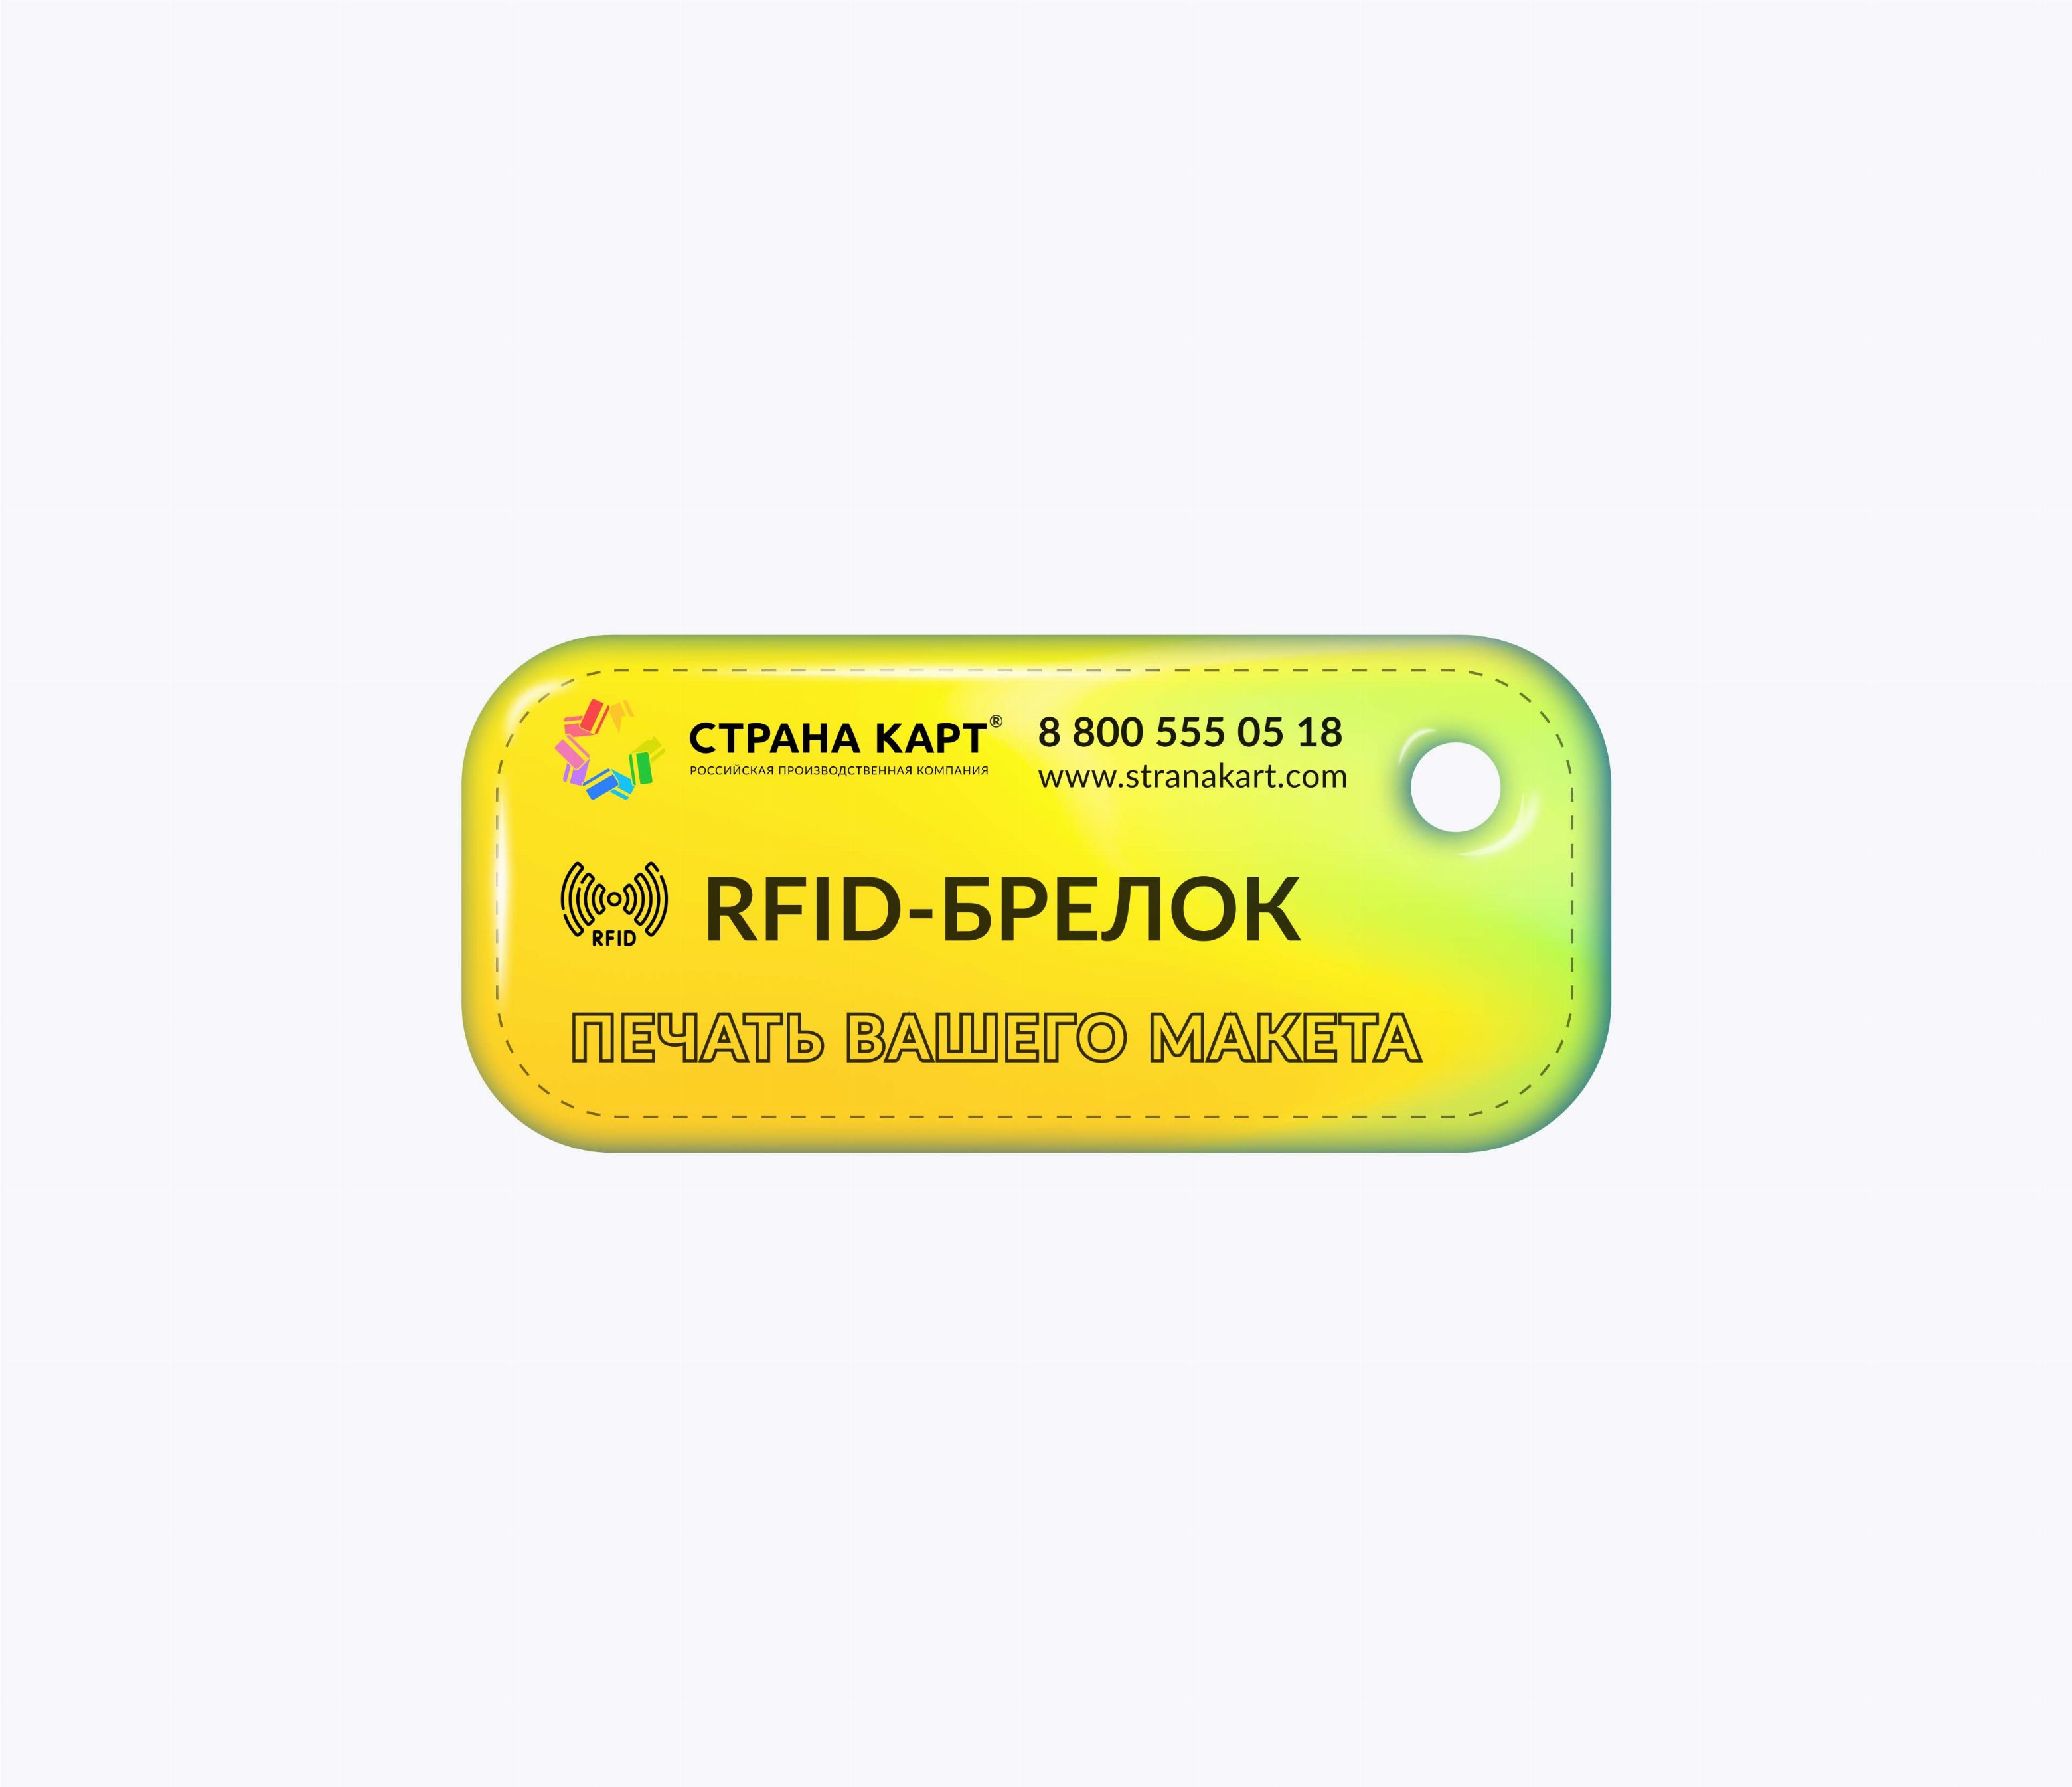 Прямоугольные мини RFID-брелоки NEOKEY® с чипом NXP MIFARE Plus X 2k 7 byte UID RFID-брелоки NEOKEY® с чипом NXP MIFARE Plus X 2k 7 byte UID и вашим логотипом